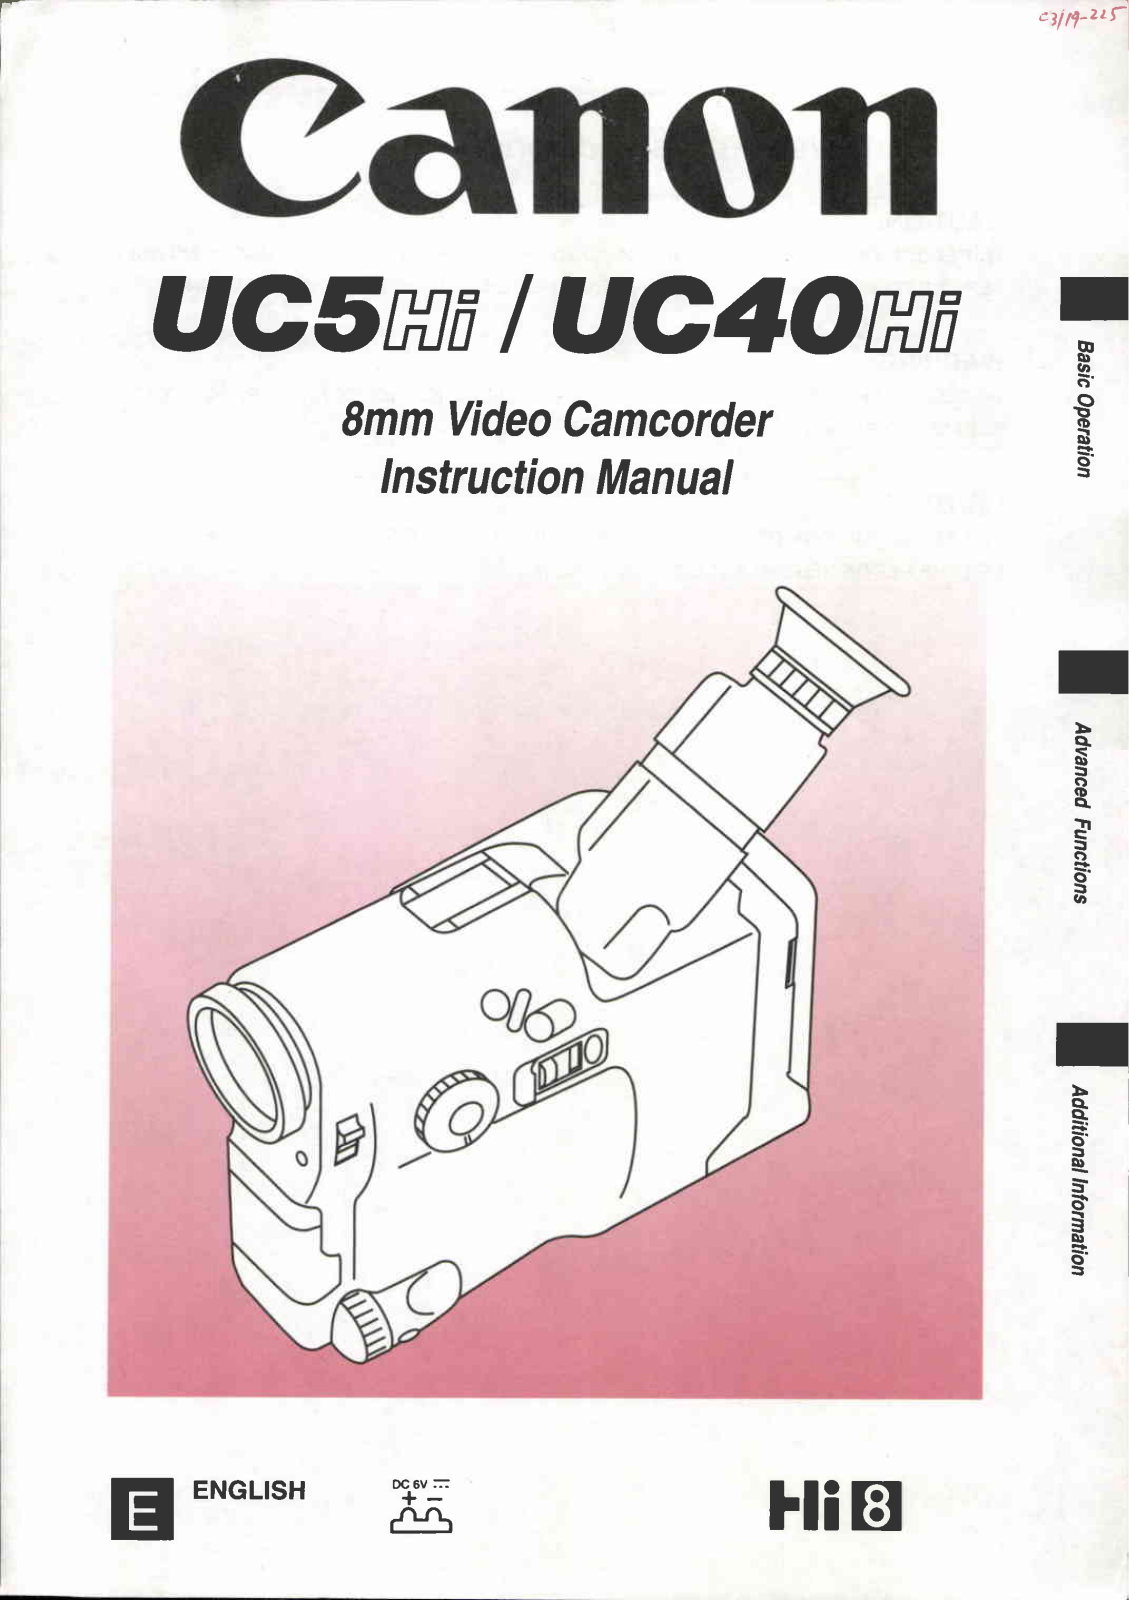 Canon UC 5 Hi, UC 40 Hi User Manual